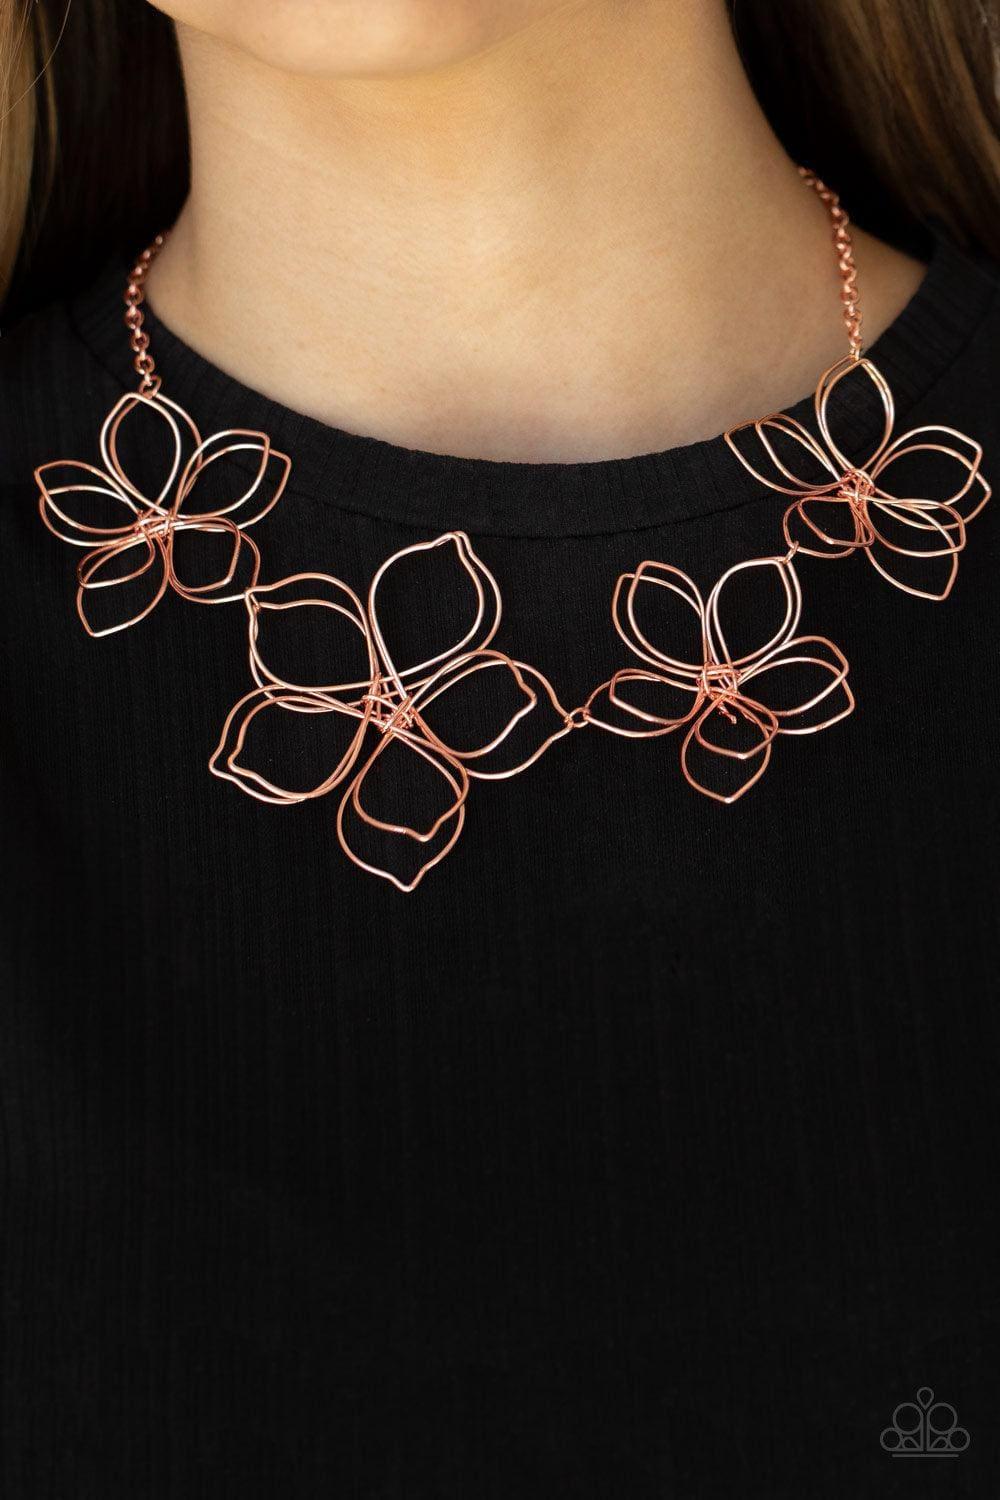 Paparazzi Accessories - Flower Garden Fashionista - Copper Necklace - Bling by JessieK